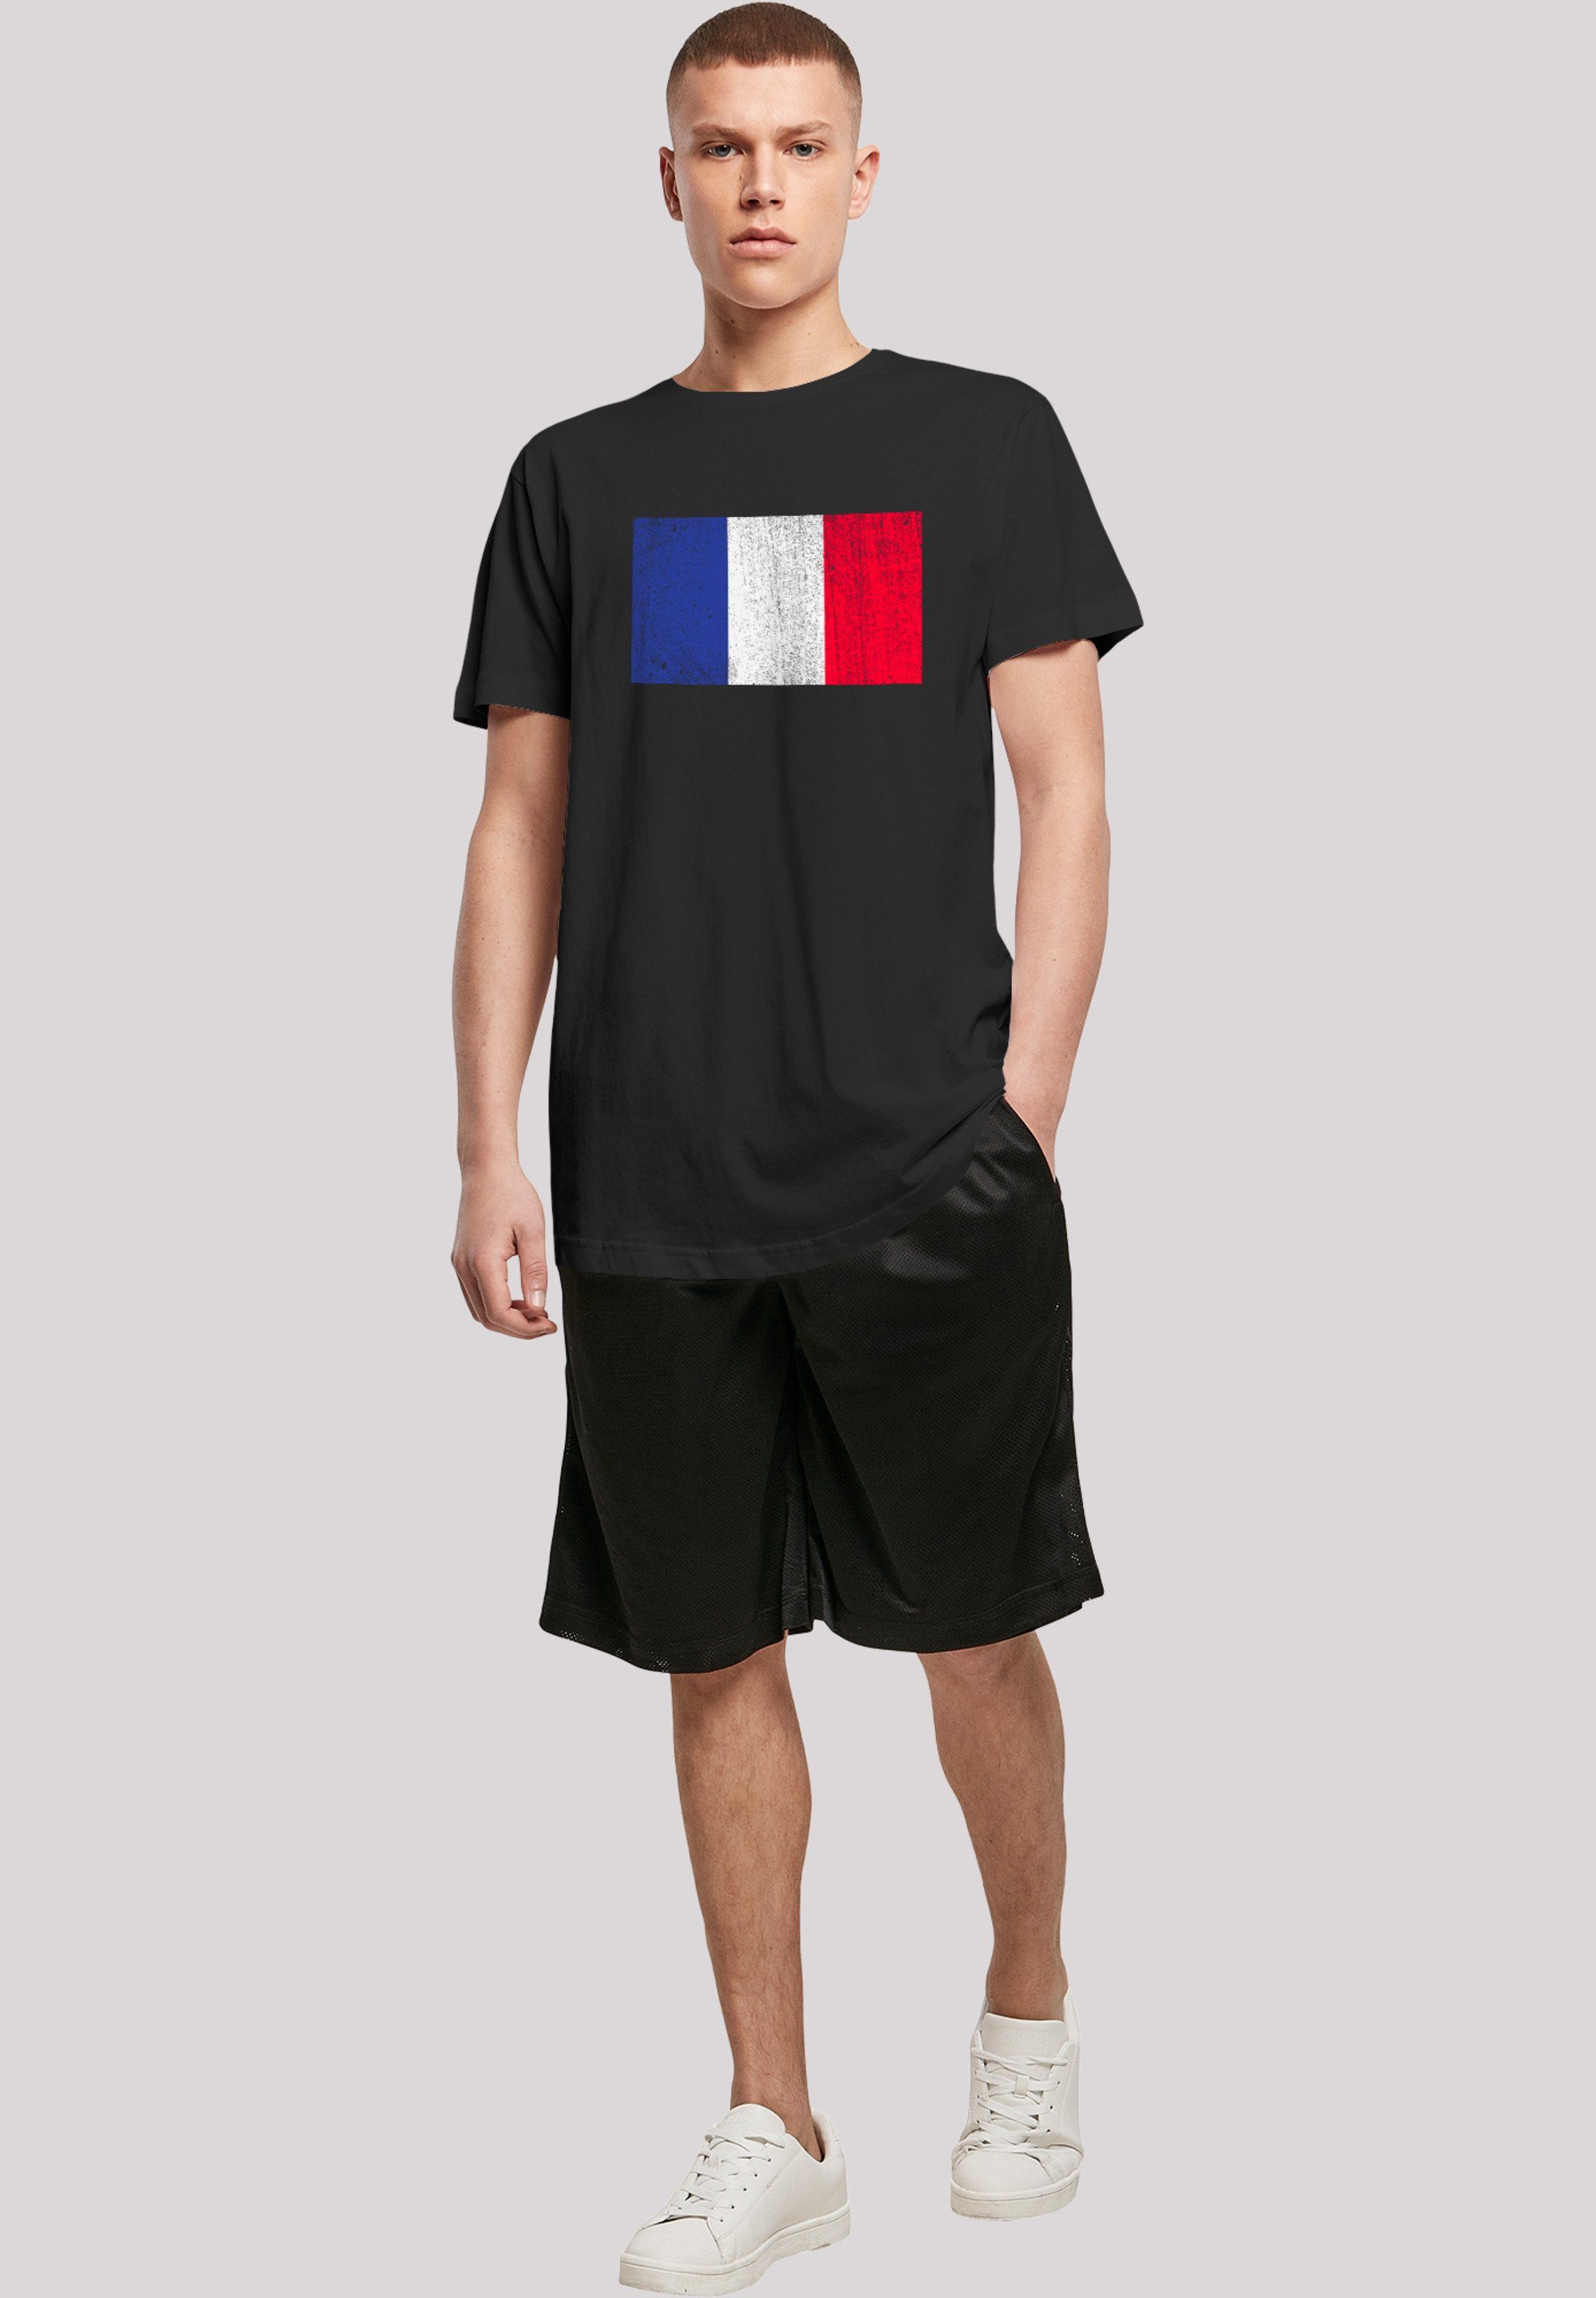 Print schwarz Frankreich distressed F4NT4STIC France T-Shirt Flagge